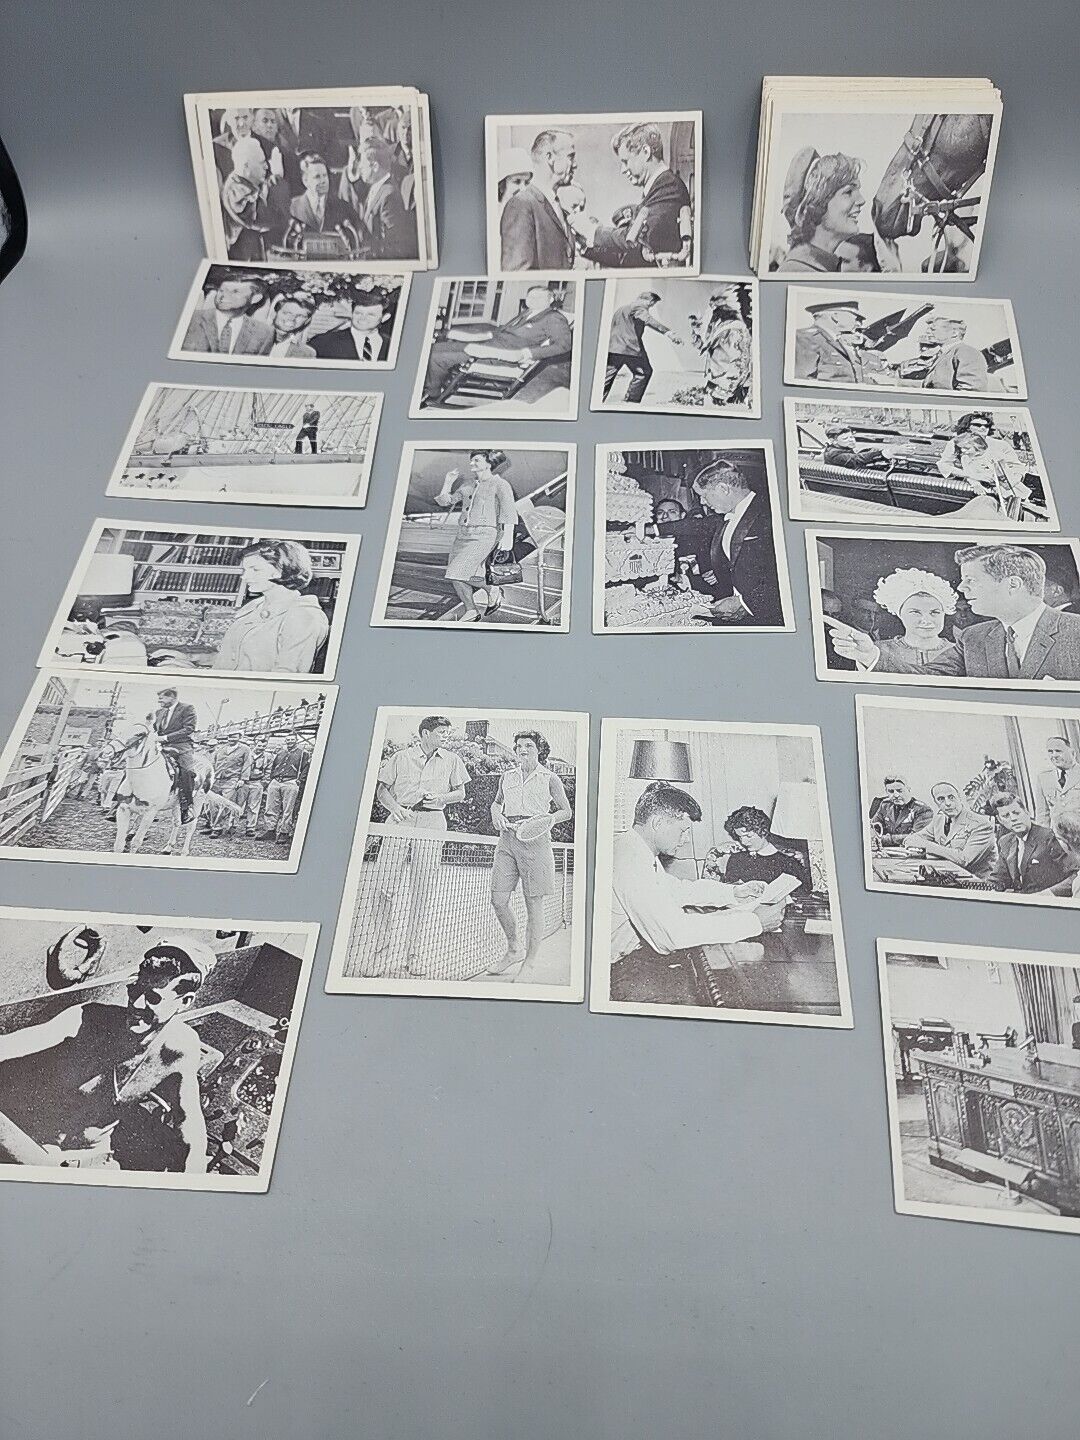 John F Kennedy JFK Lot of 49 Rosin Trading Cards 1960s Printed in Brooklyn B&W